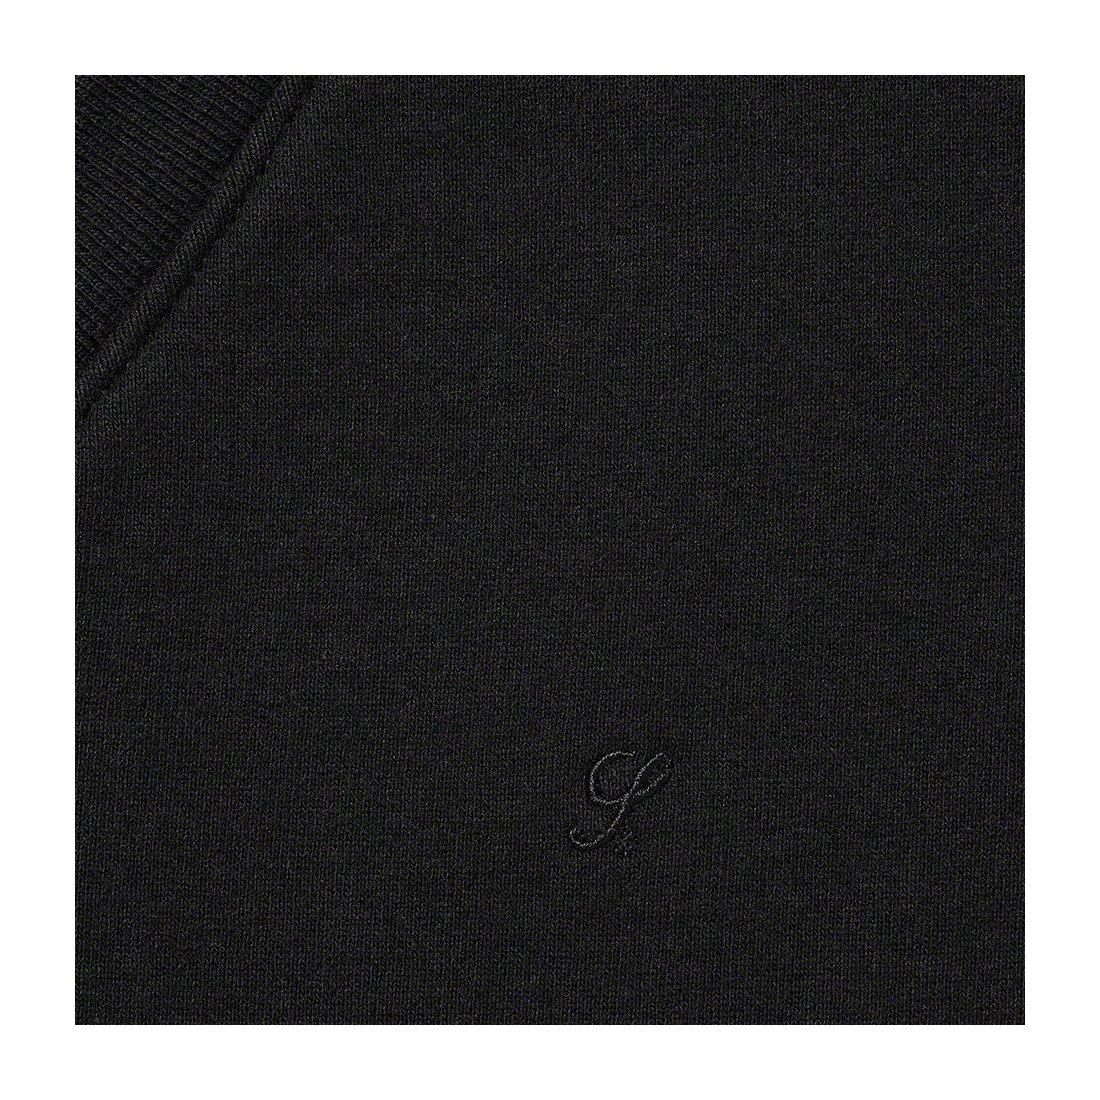 Details on Sweatshirt Vest Black from spring summer 2023 (Price is $128)